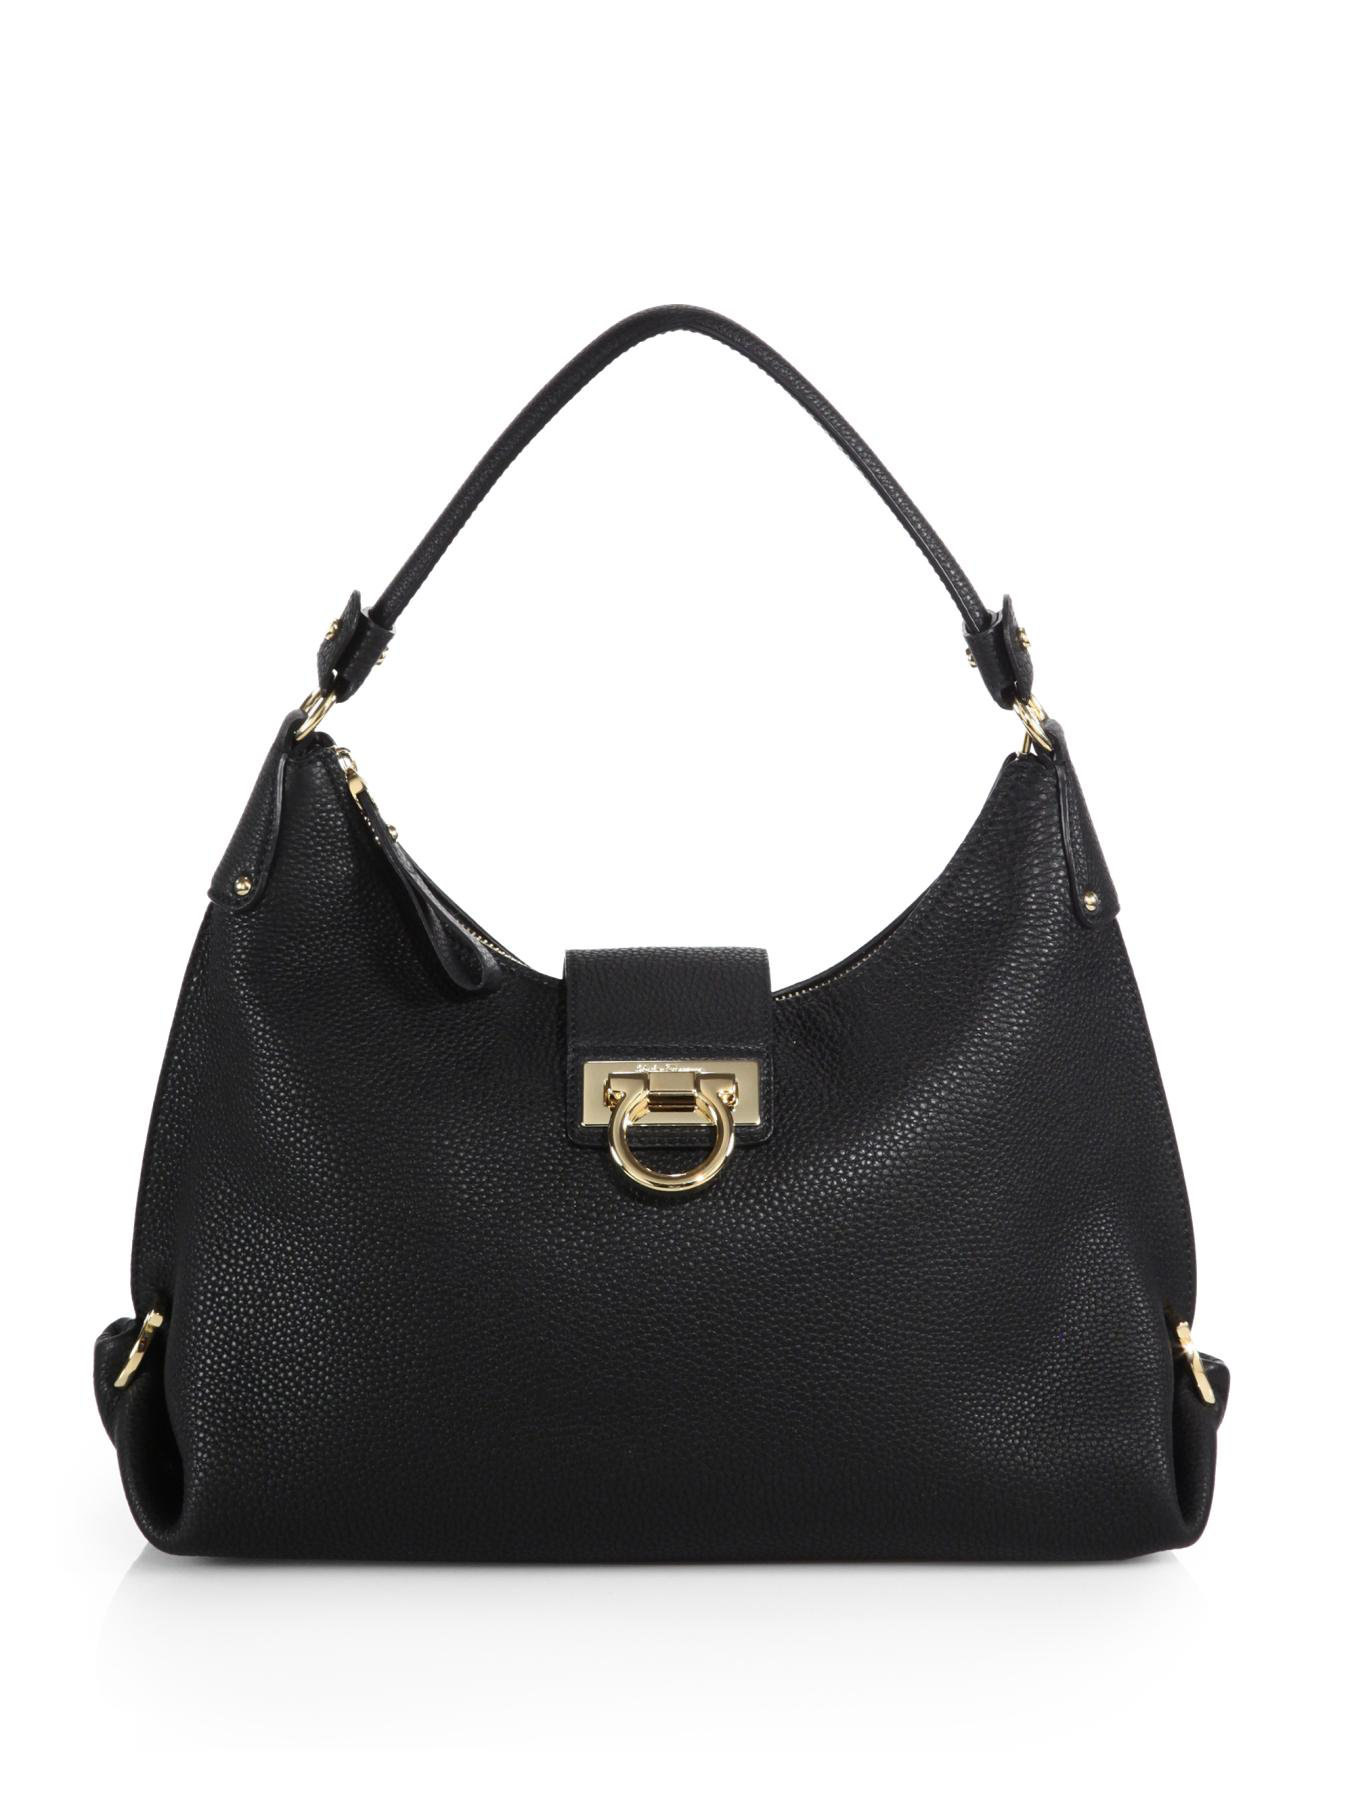 Ferragamo Fanisa Small Leather Hobo Bag in Black | Lyst